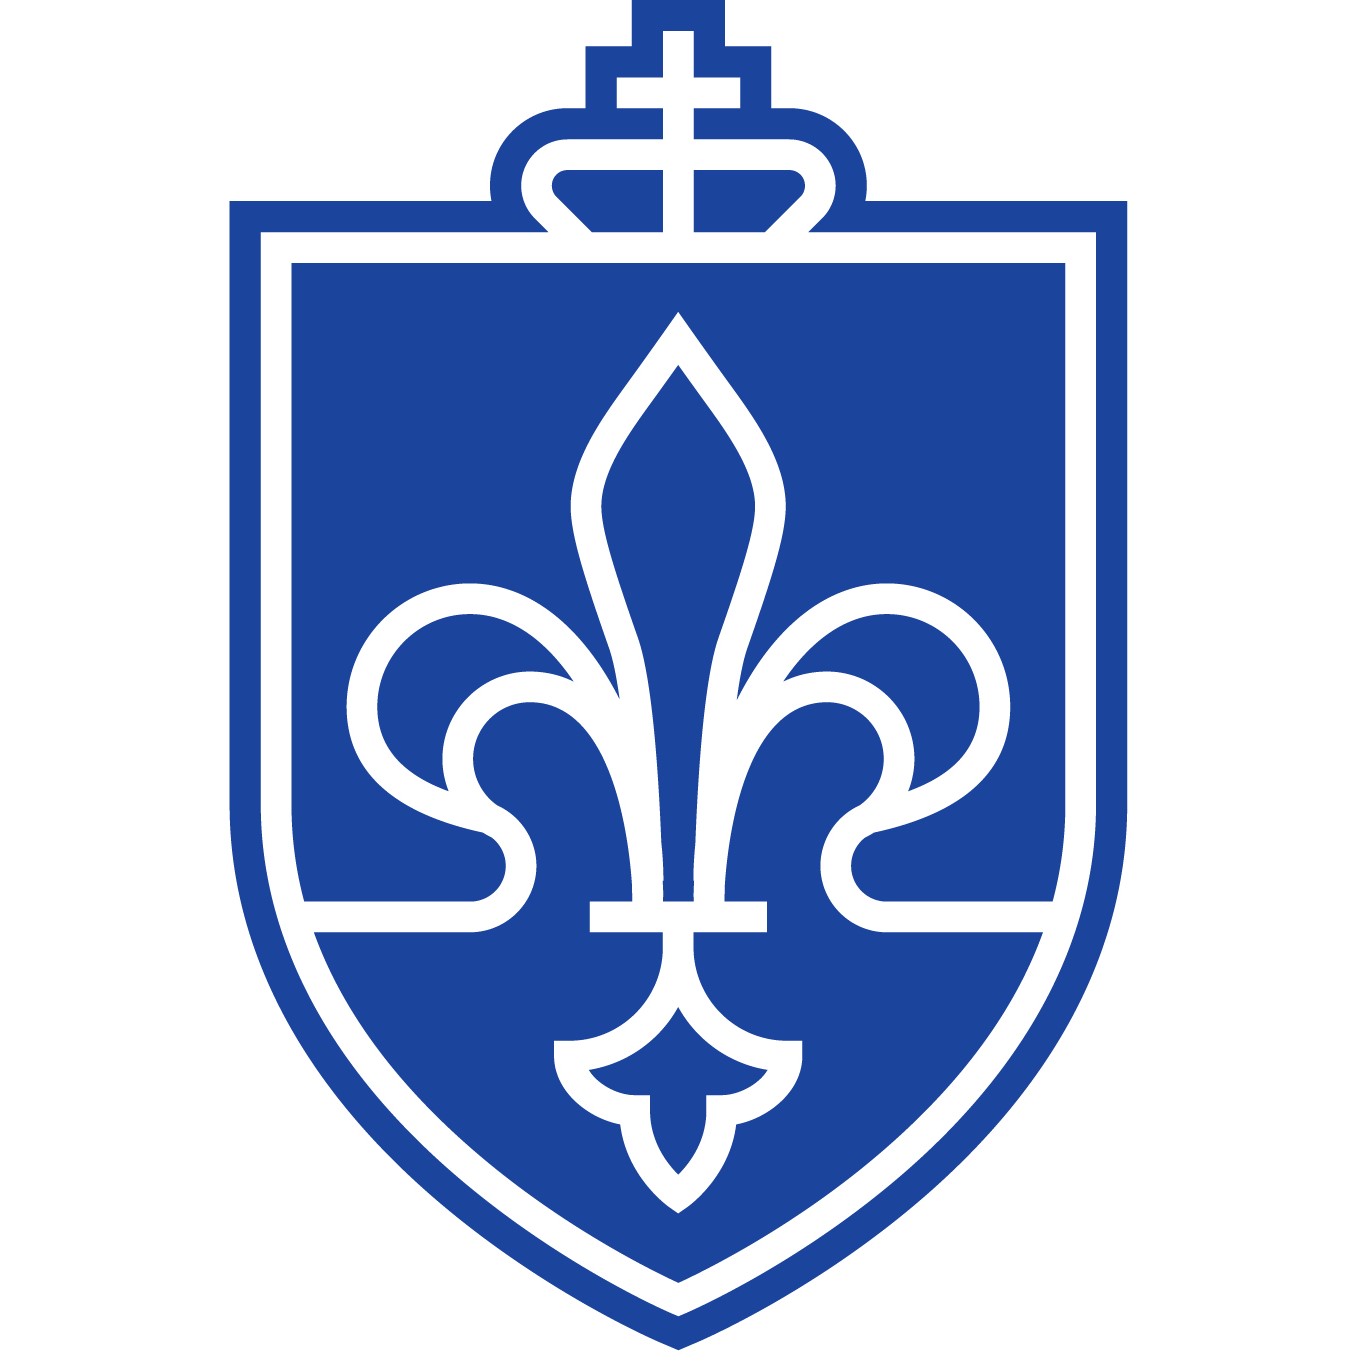 Saint Louis University Logo